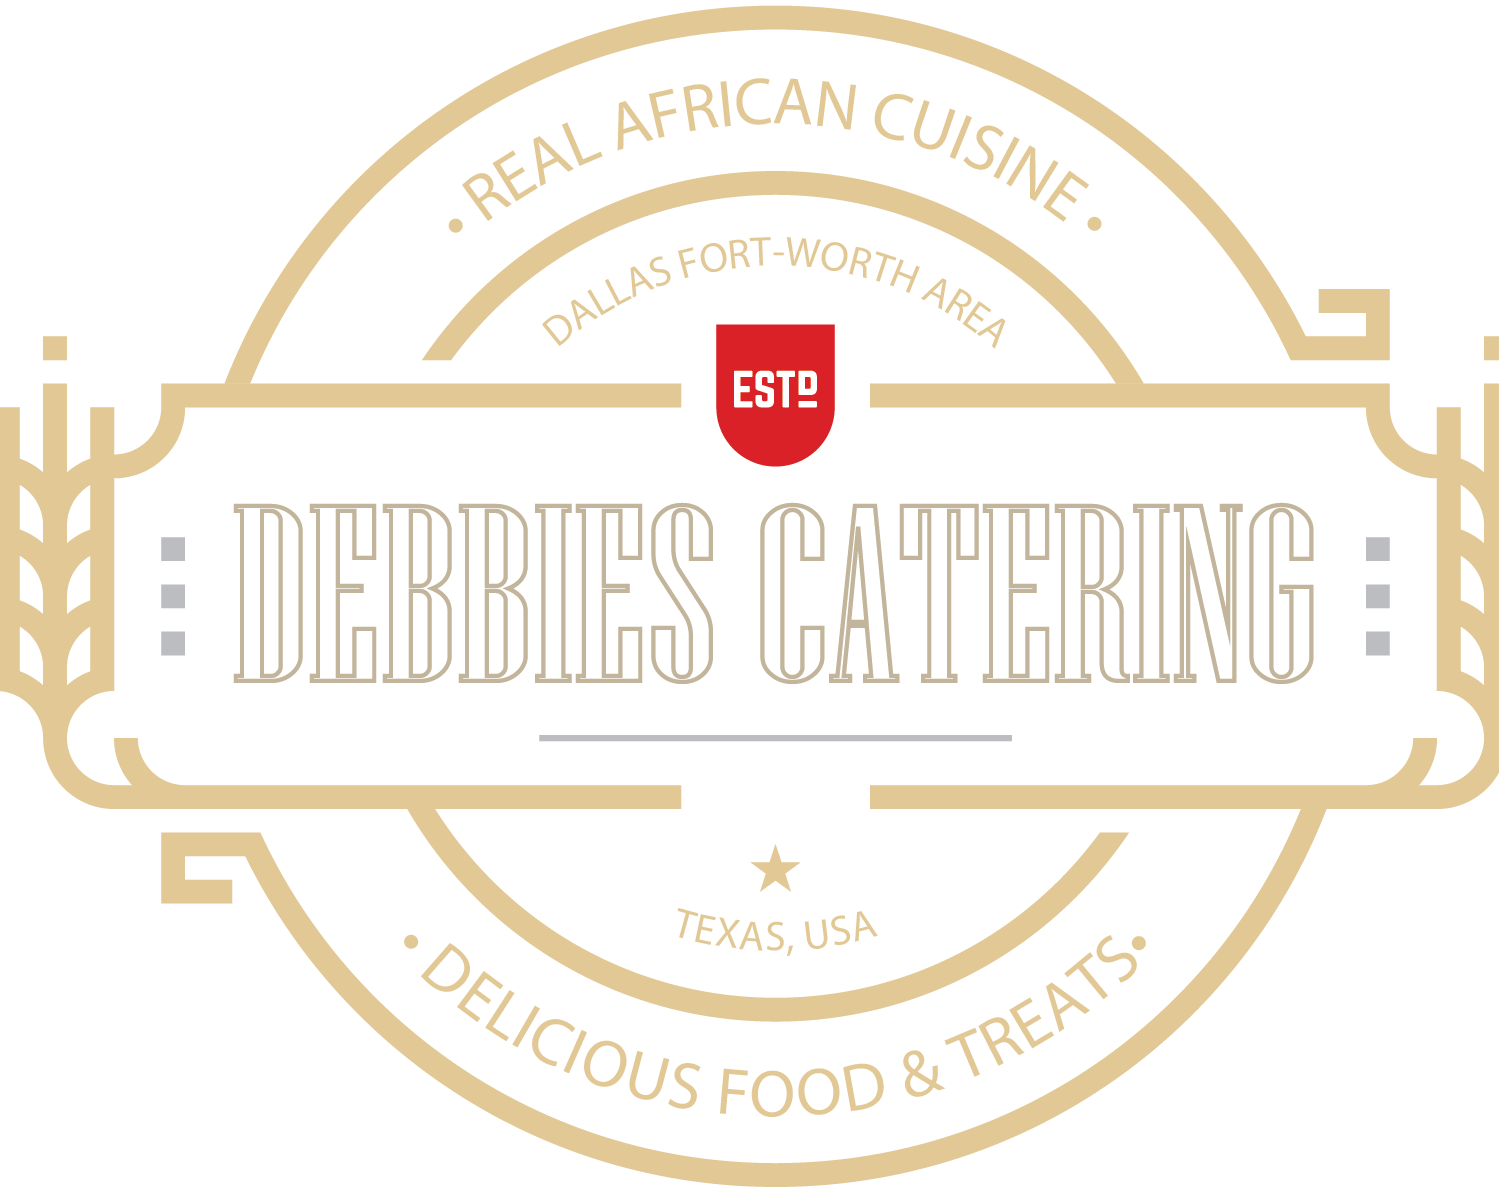 Debbies Catering